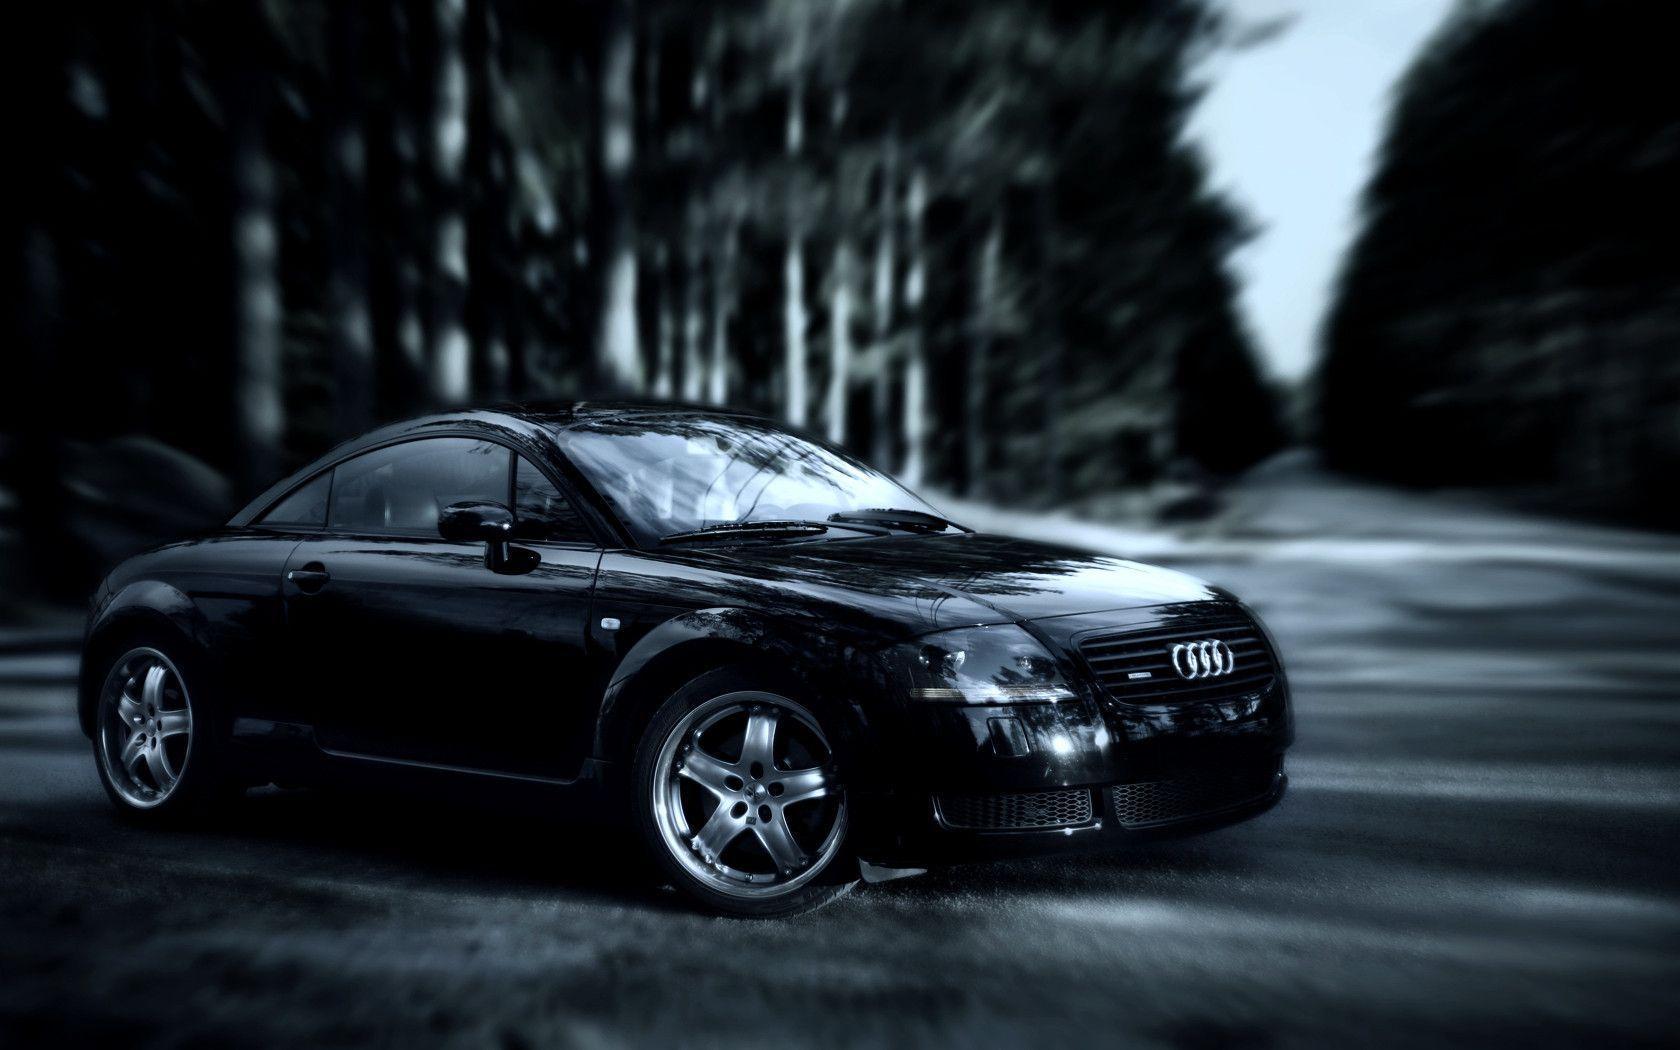 Audi Tt Roadster Wallpapers